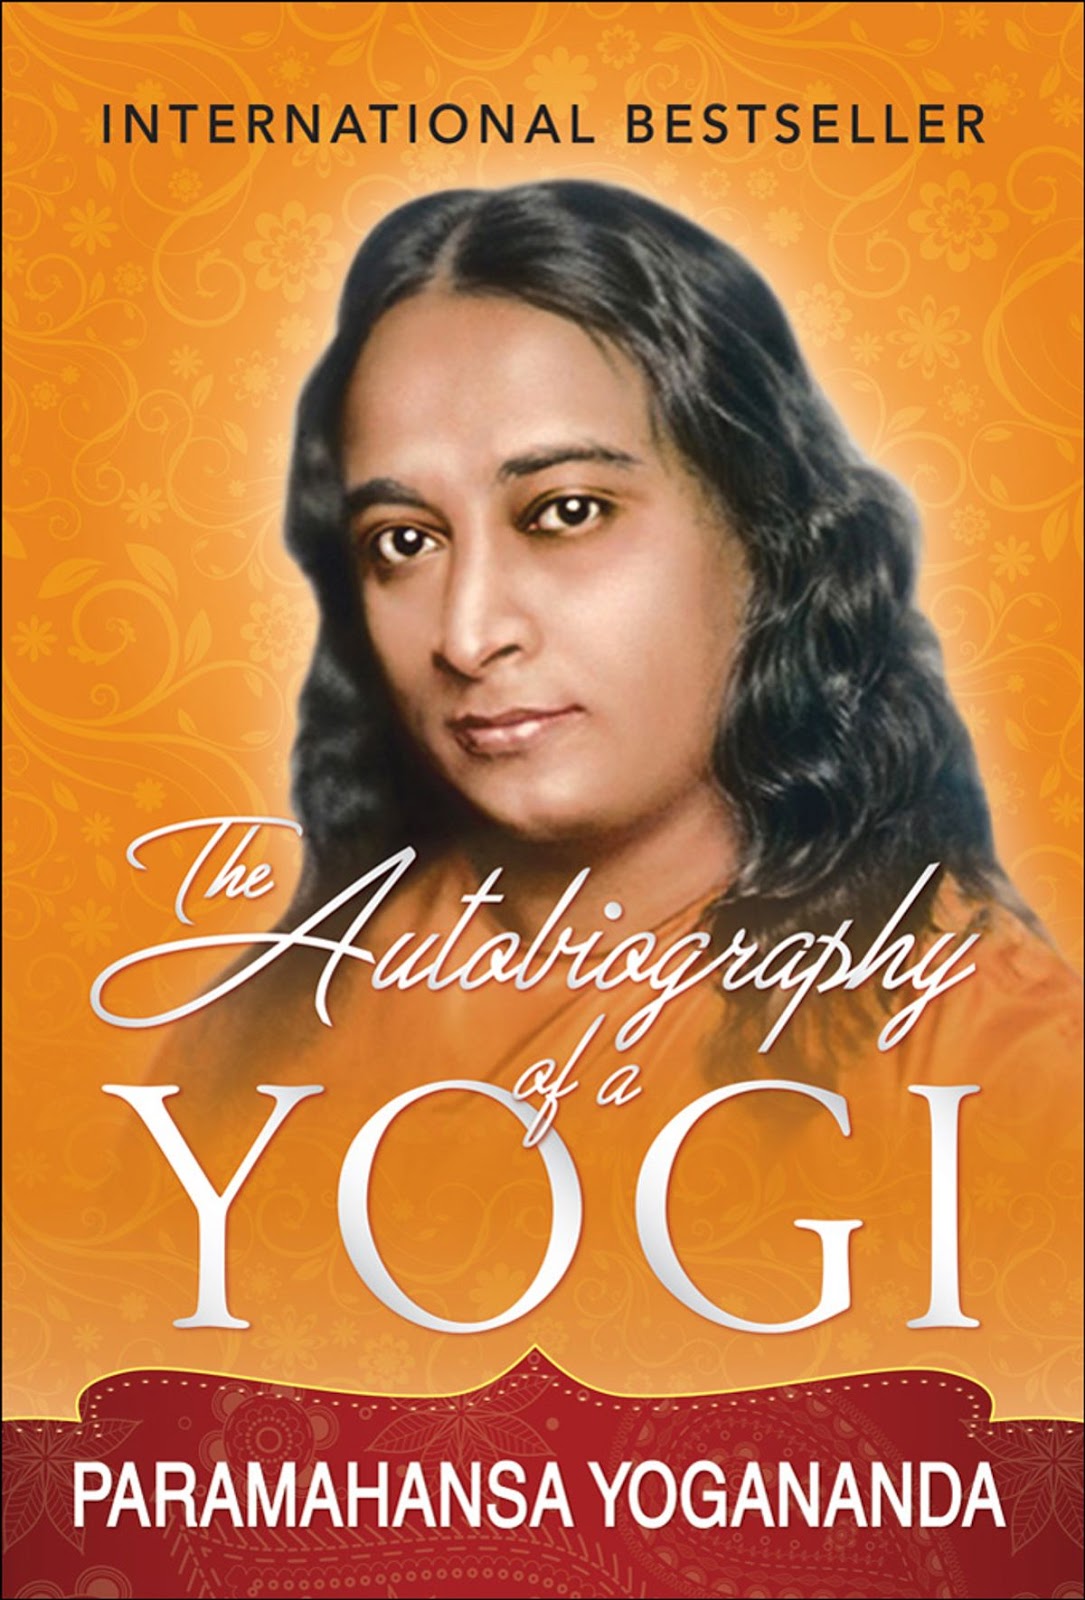 autobiography of a yogi blue vs orange